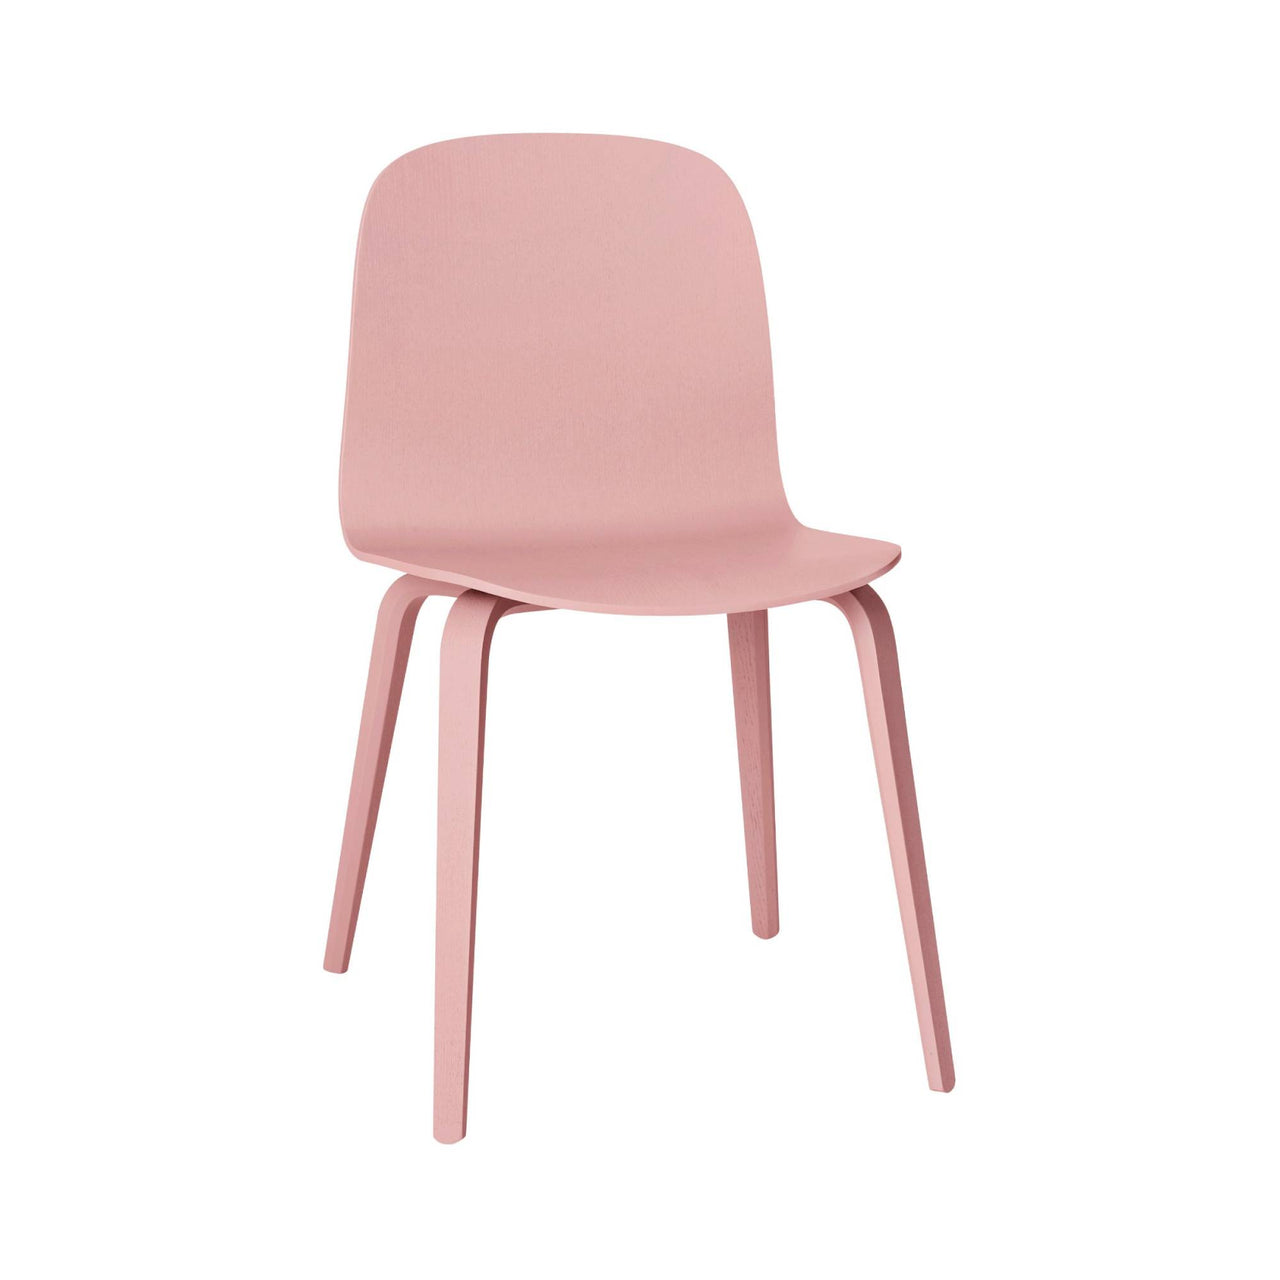 Visu Chair: Wood Base + Tan Rose